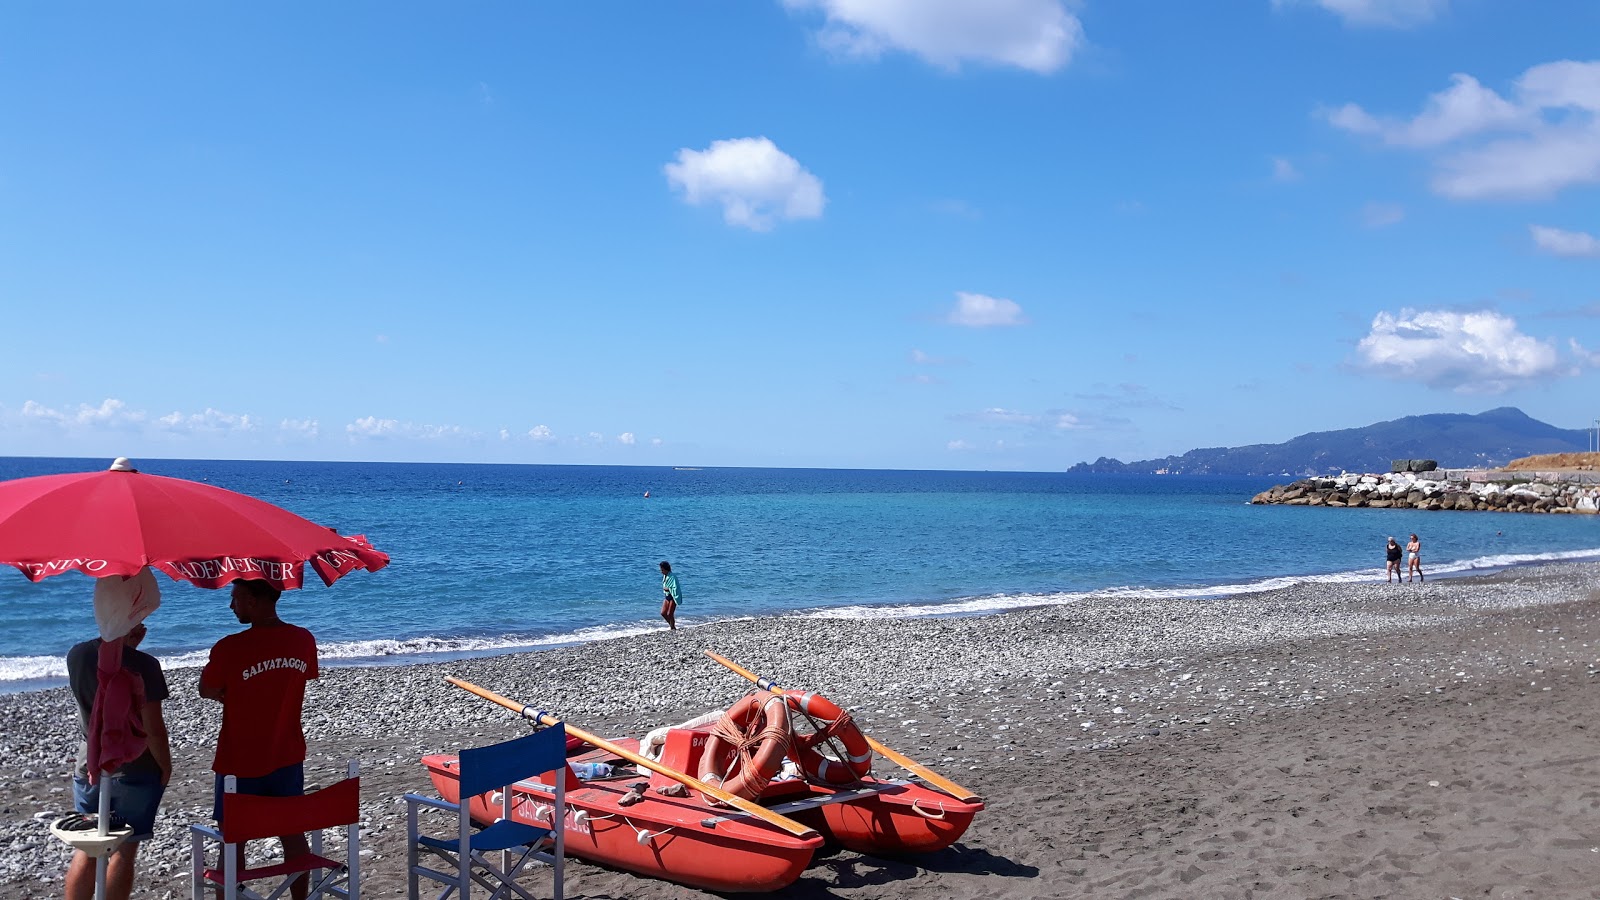 Foto av Spiaggia Tito Groppo med rak strand